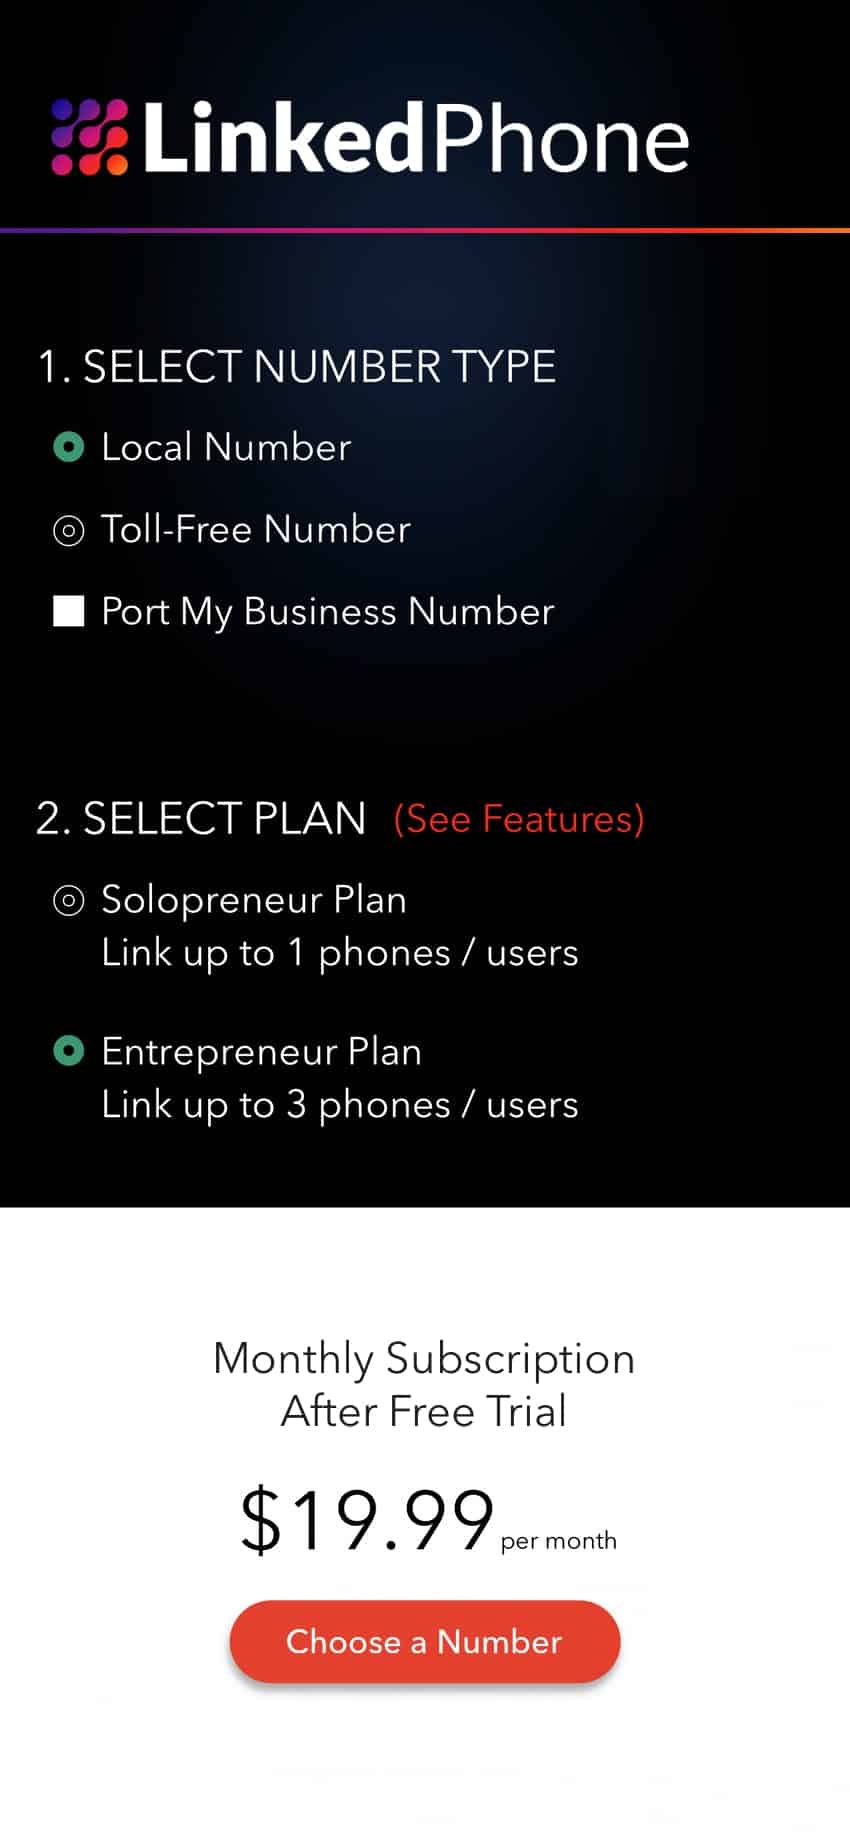 LinkedPhone Mobile App Screenshot - Choose a Subscription - Entrepreneur Plan Plan